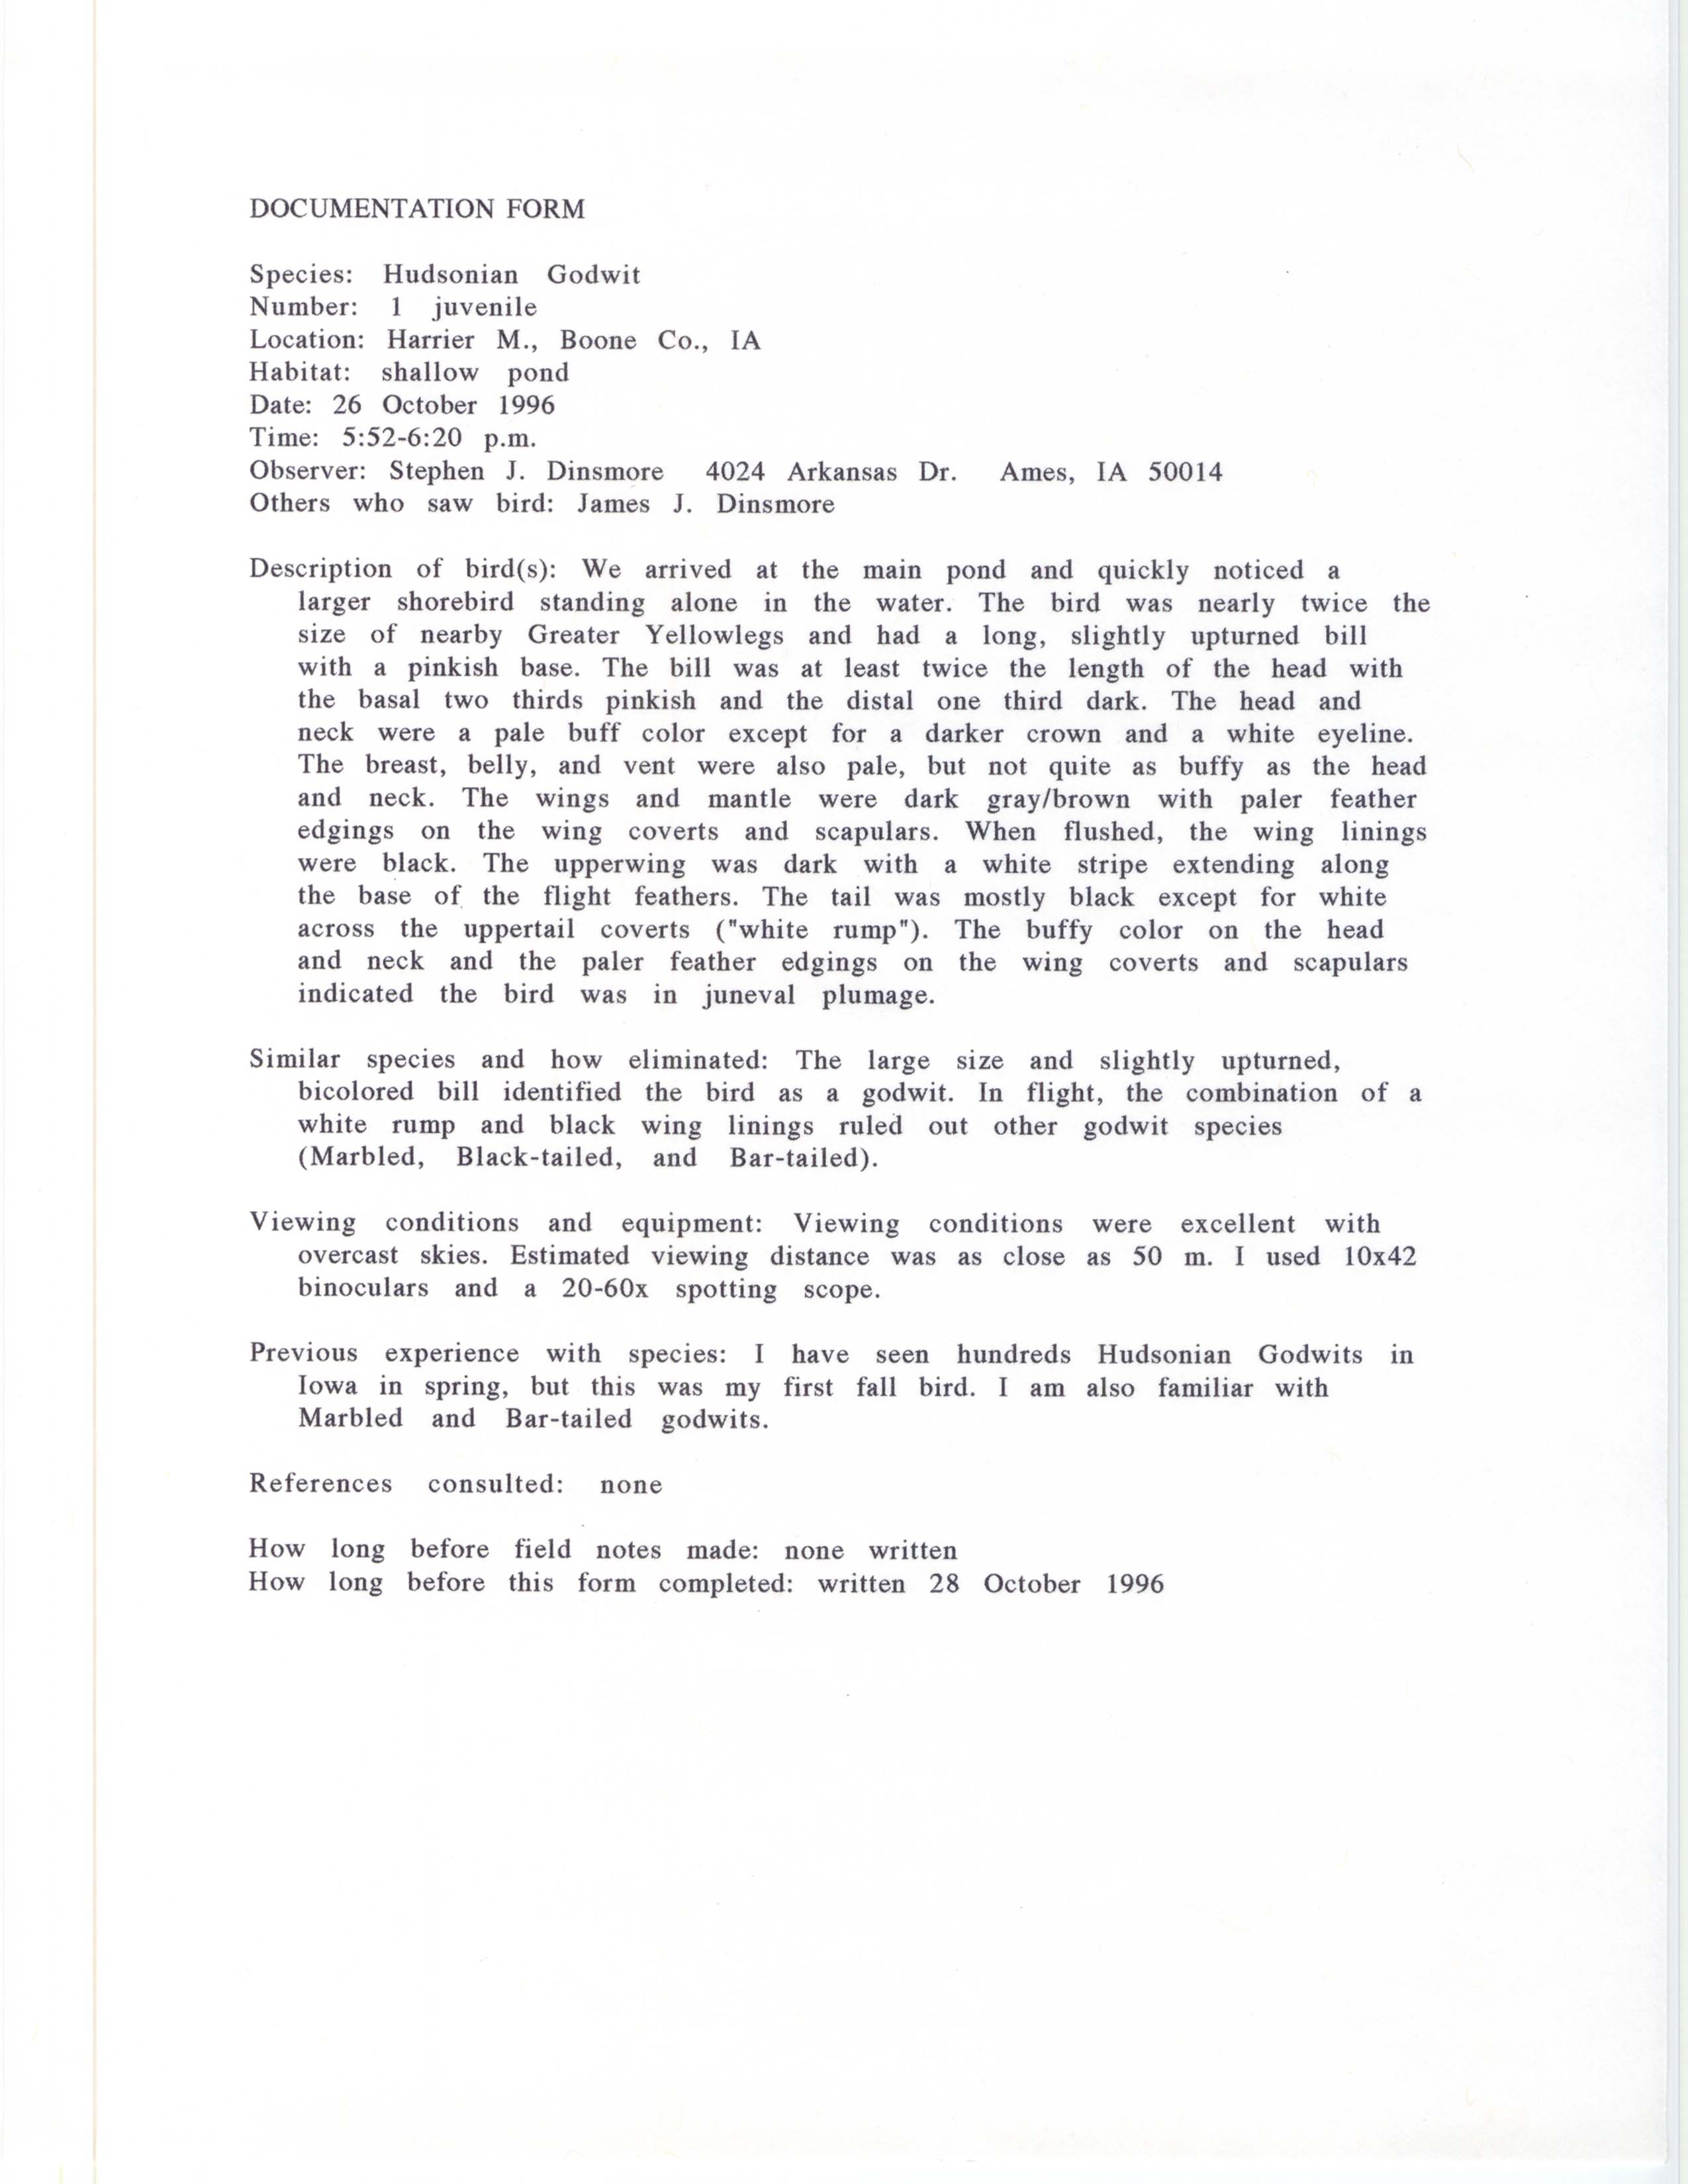 Rare bird documentation form for Hudsonian Godwit at Harrier Marsh, 1996